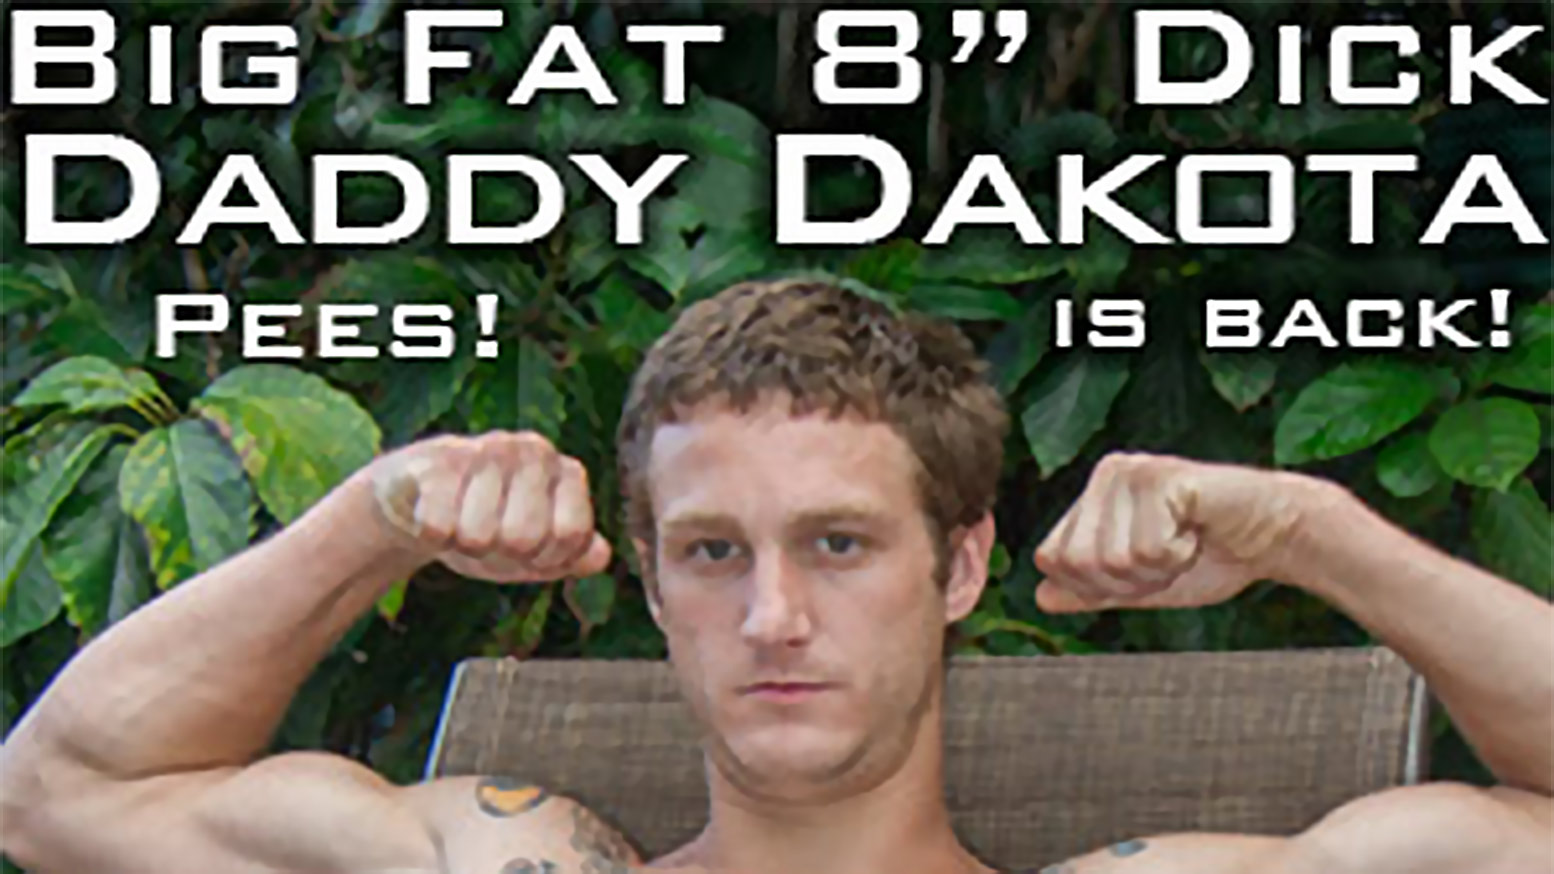 Big Dick Dakota is Back!